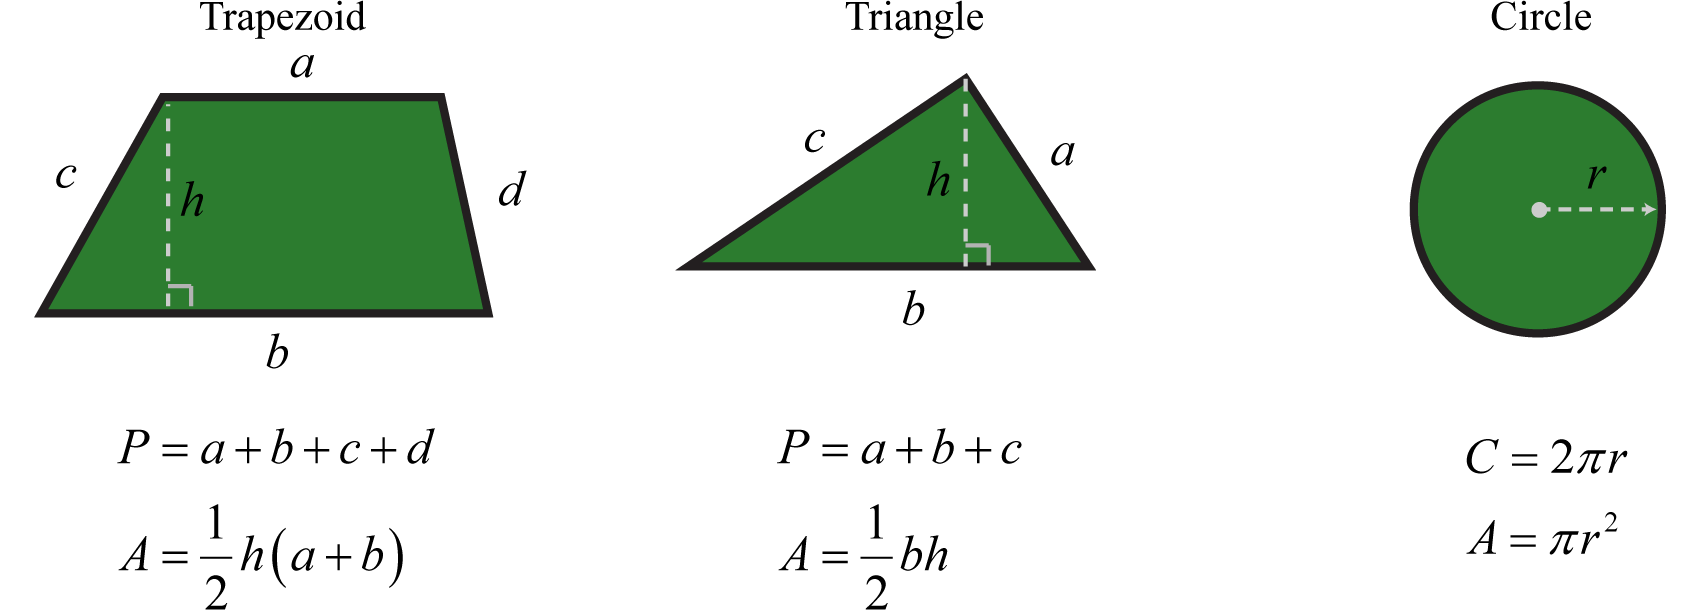 Trapezoid, Triangle, Circle formulas for perimeter and area.